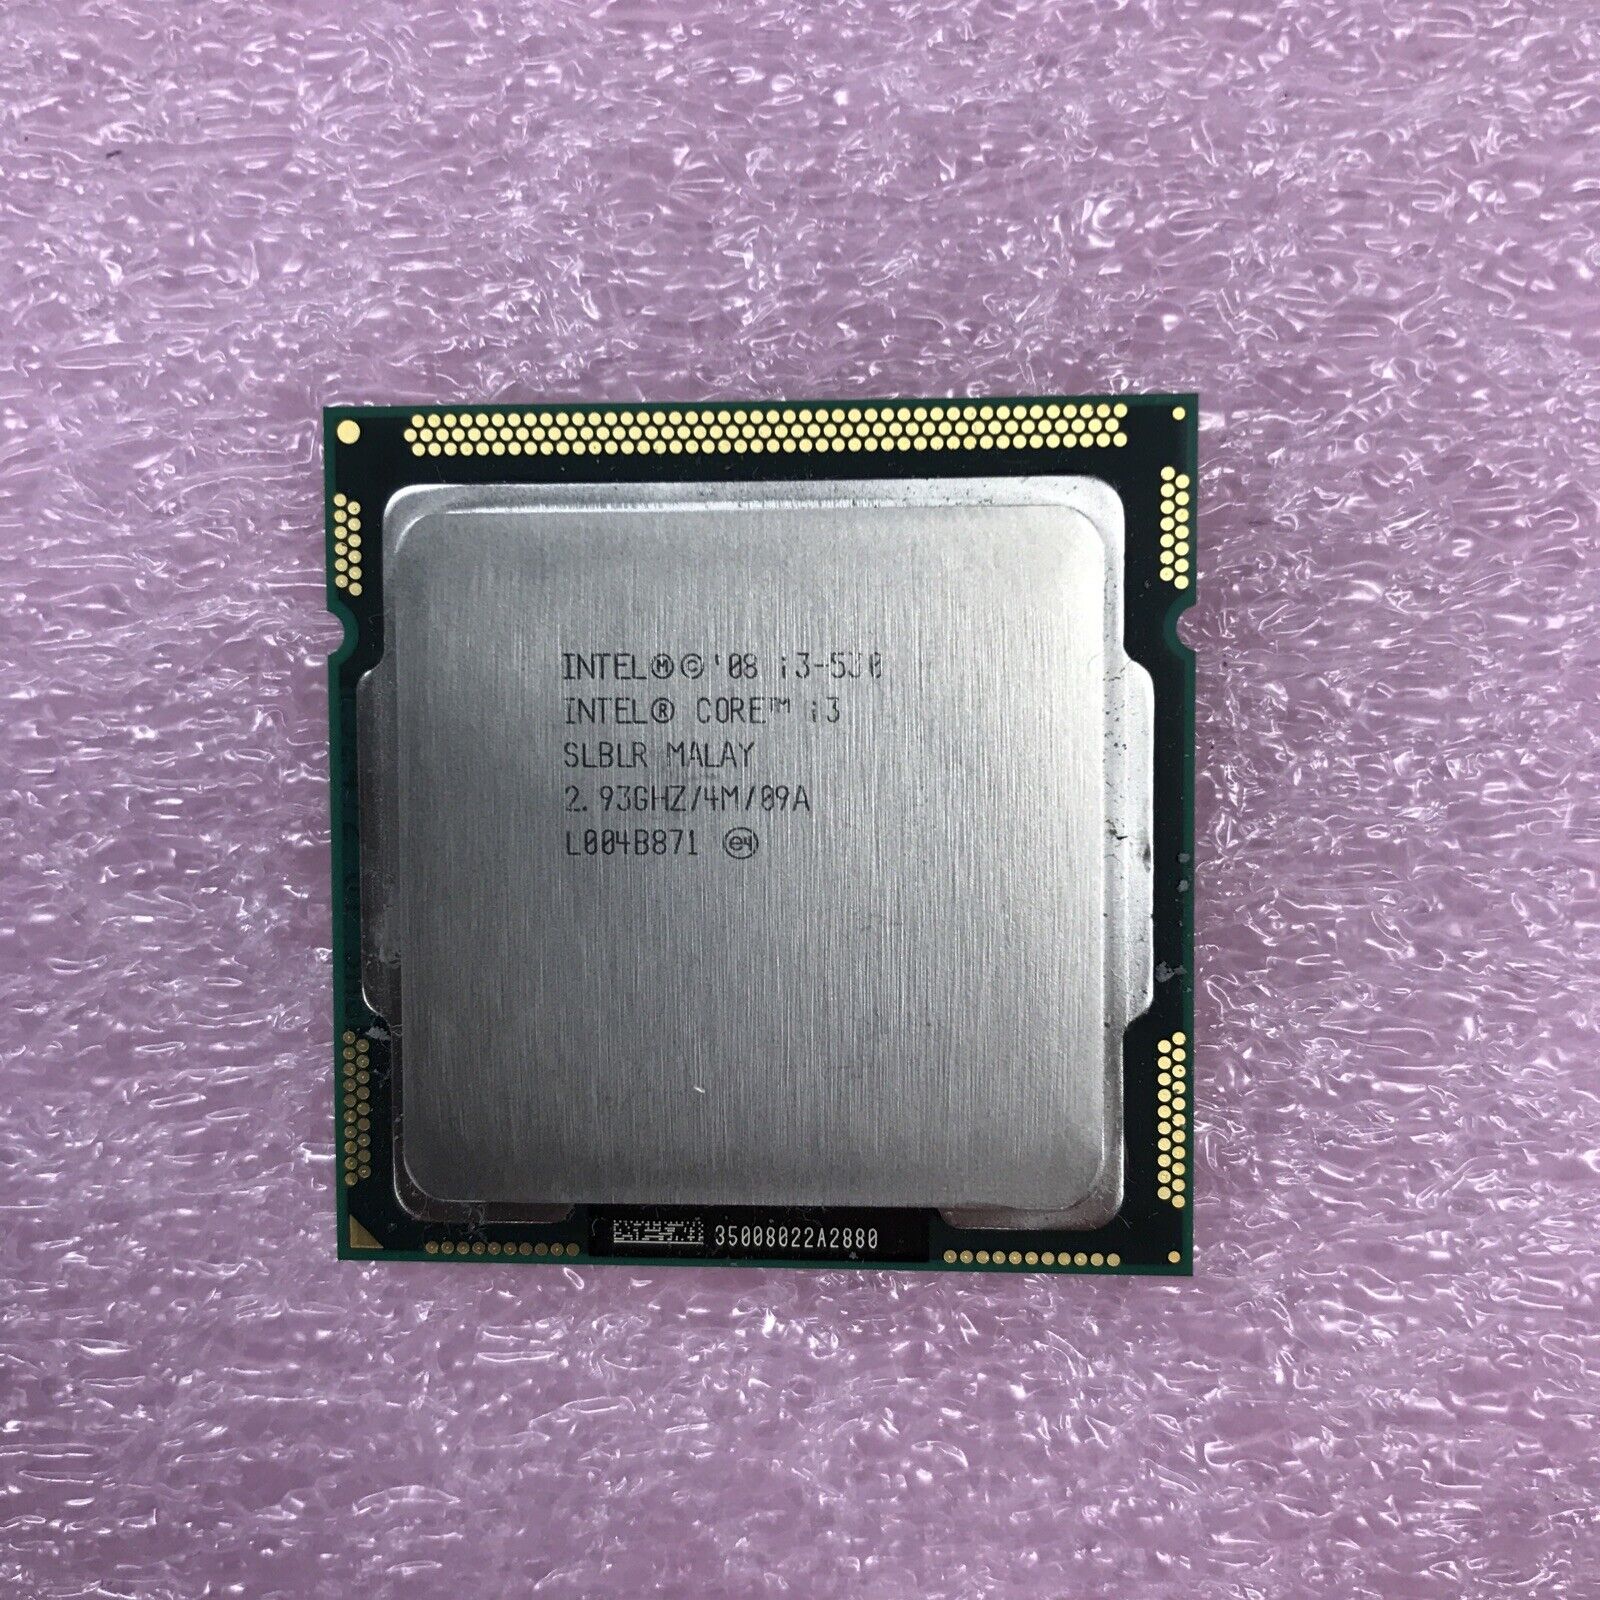 (Lot of 2) Intel Core i3-530 SLBLR MALAY 2.93GHz CPU Processor